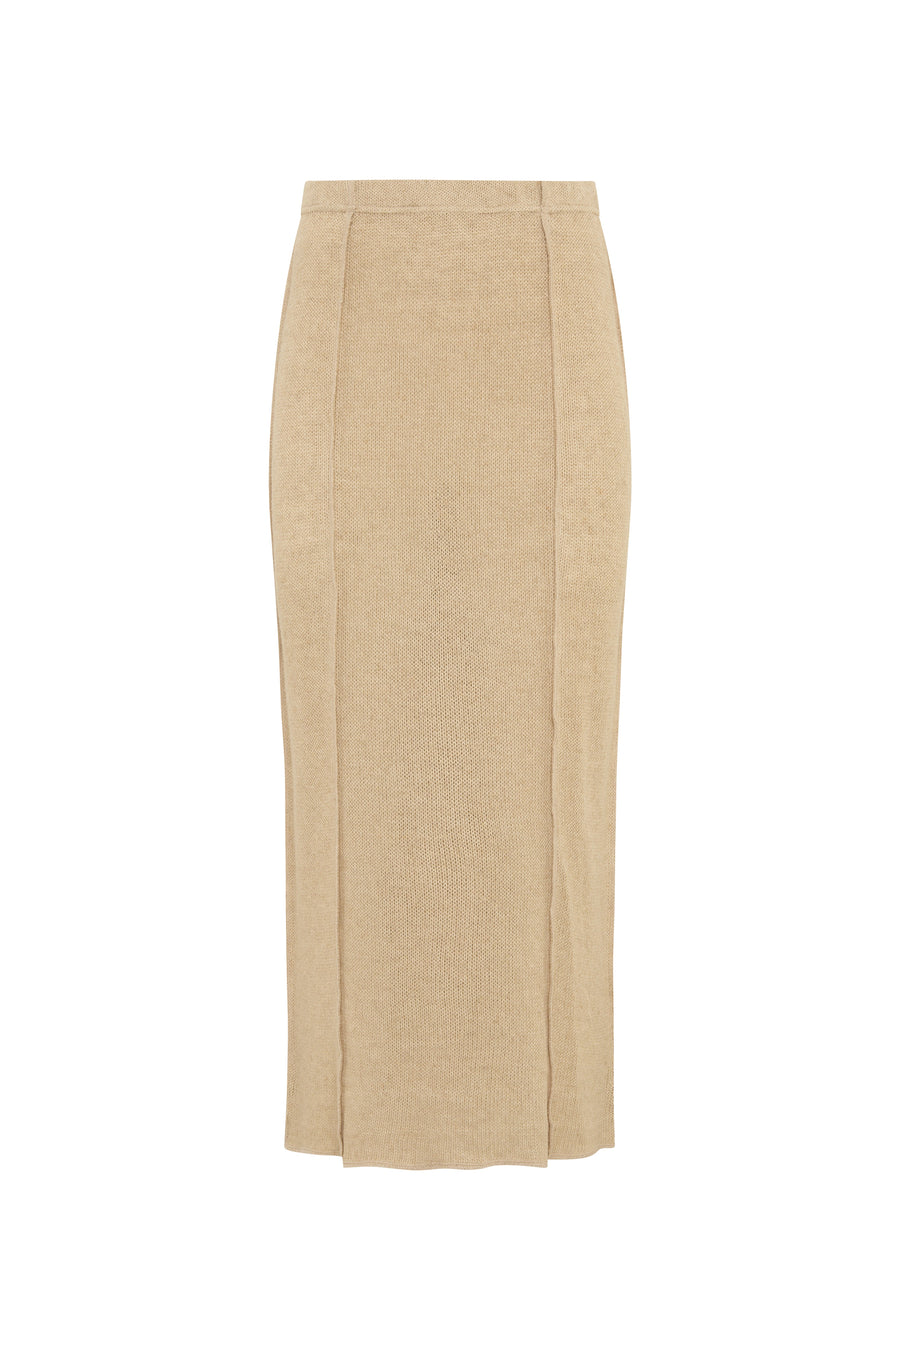 FERI - Low-rise knit maxi skirt